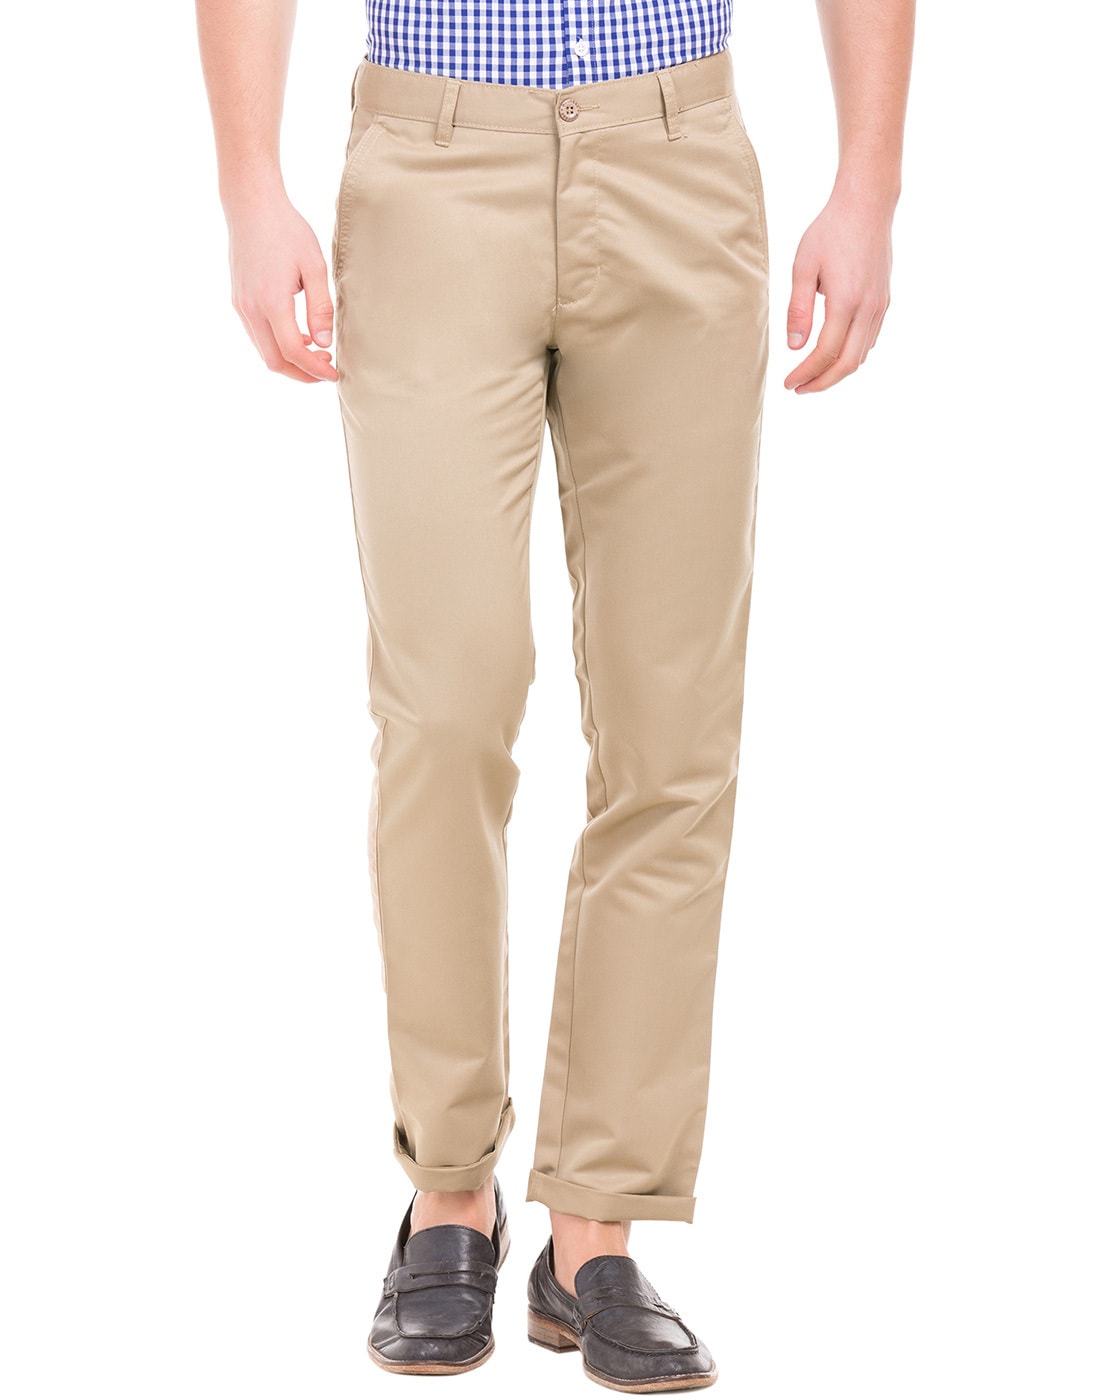 Buy Khaki Trousers  Pants for Men by Ruggers Online  Ajiocom